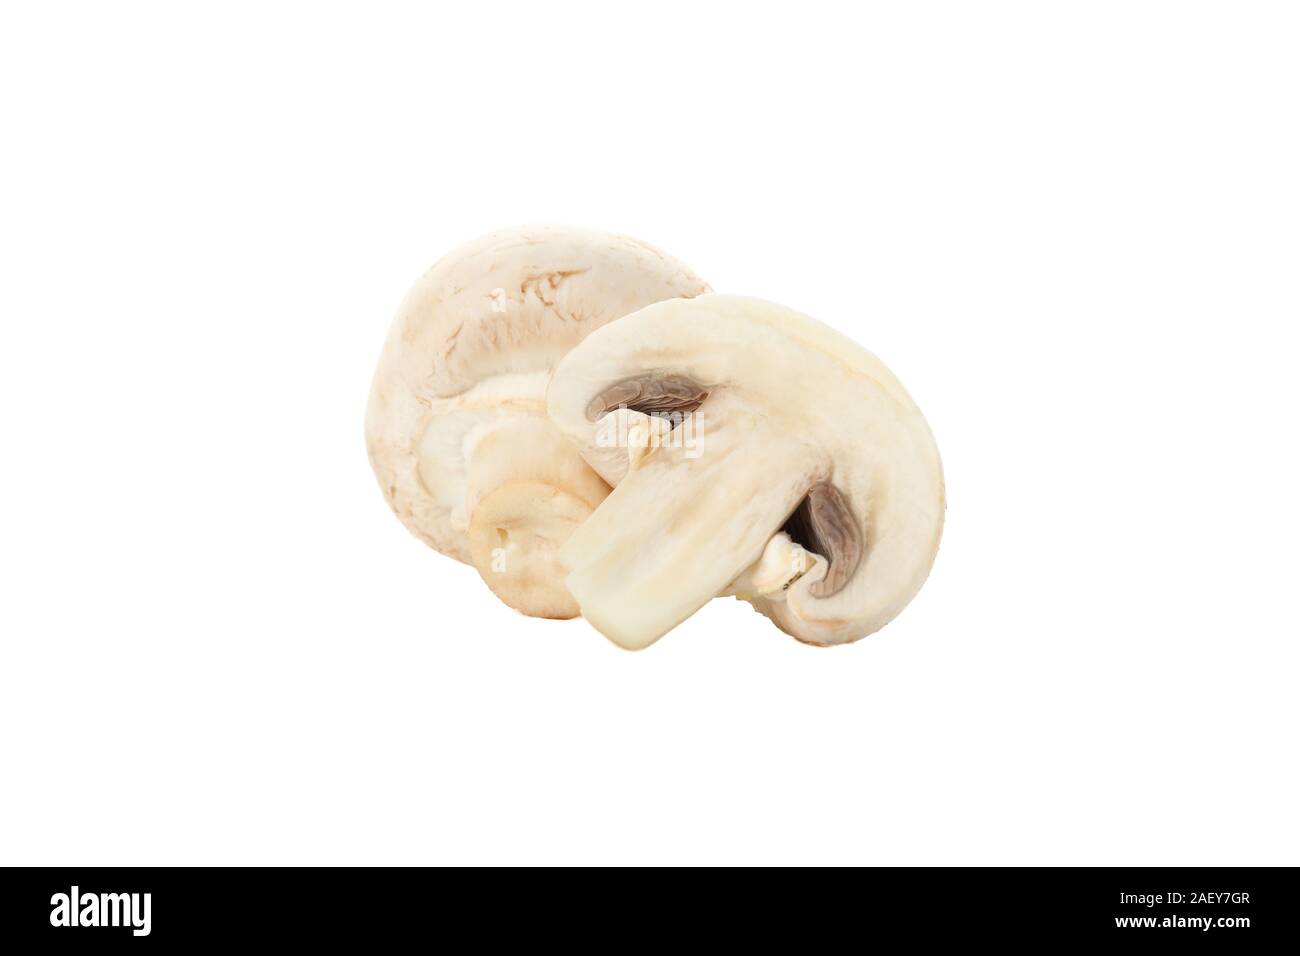 Сhampignon mushrooms isolated on white background, close up Stock Photo